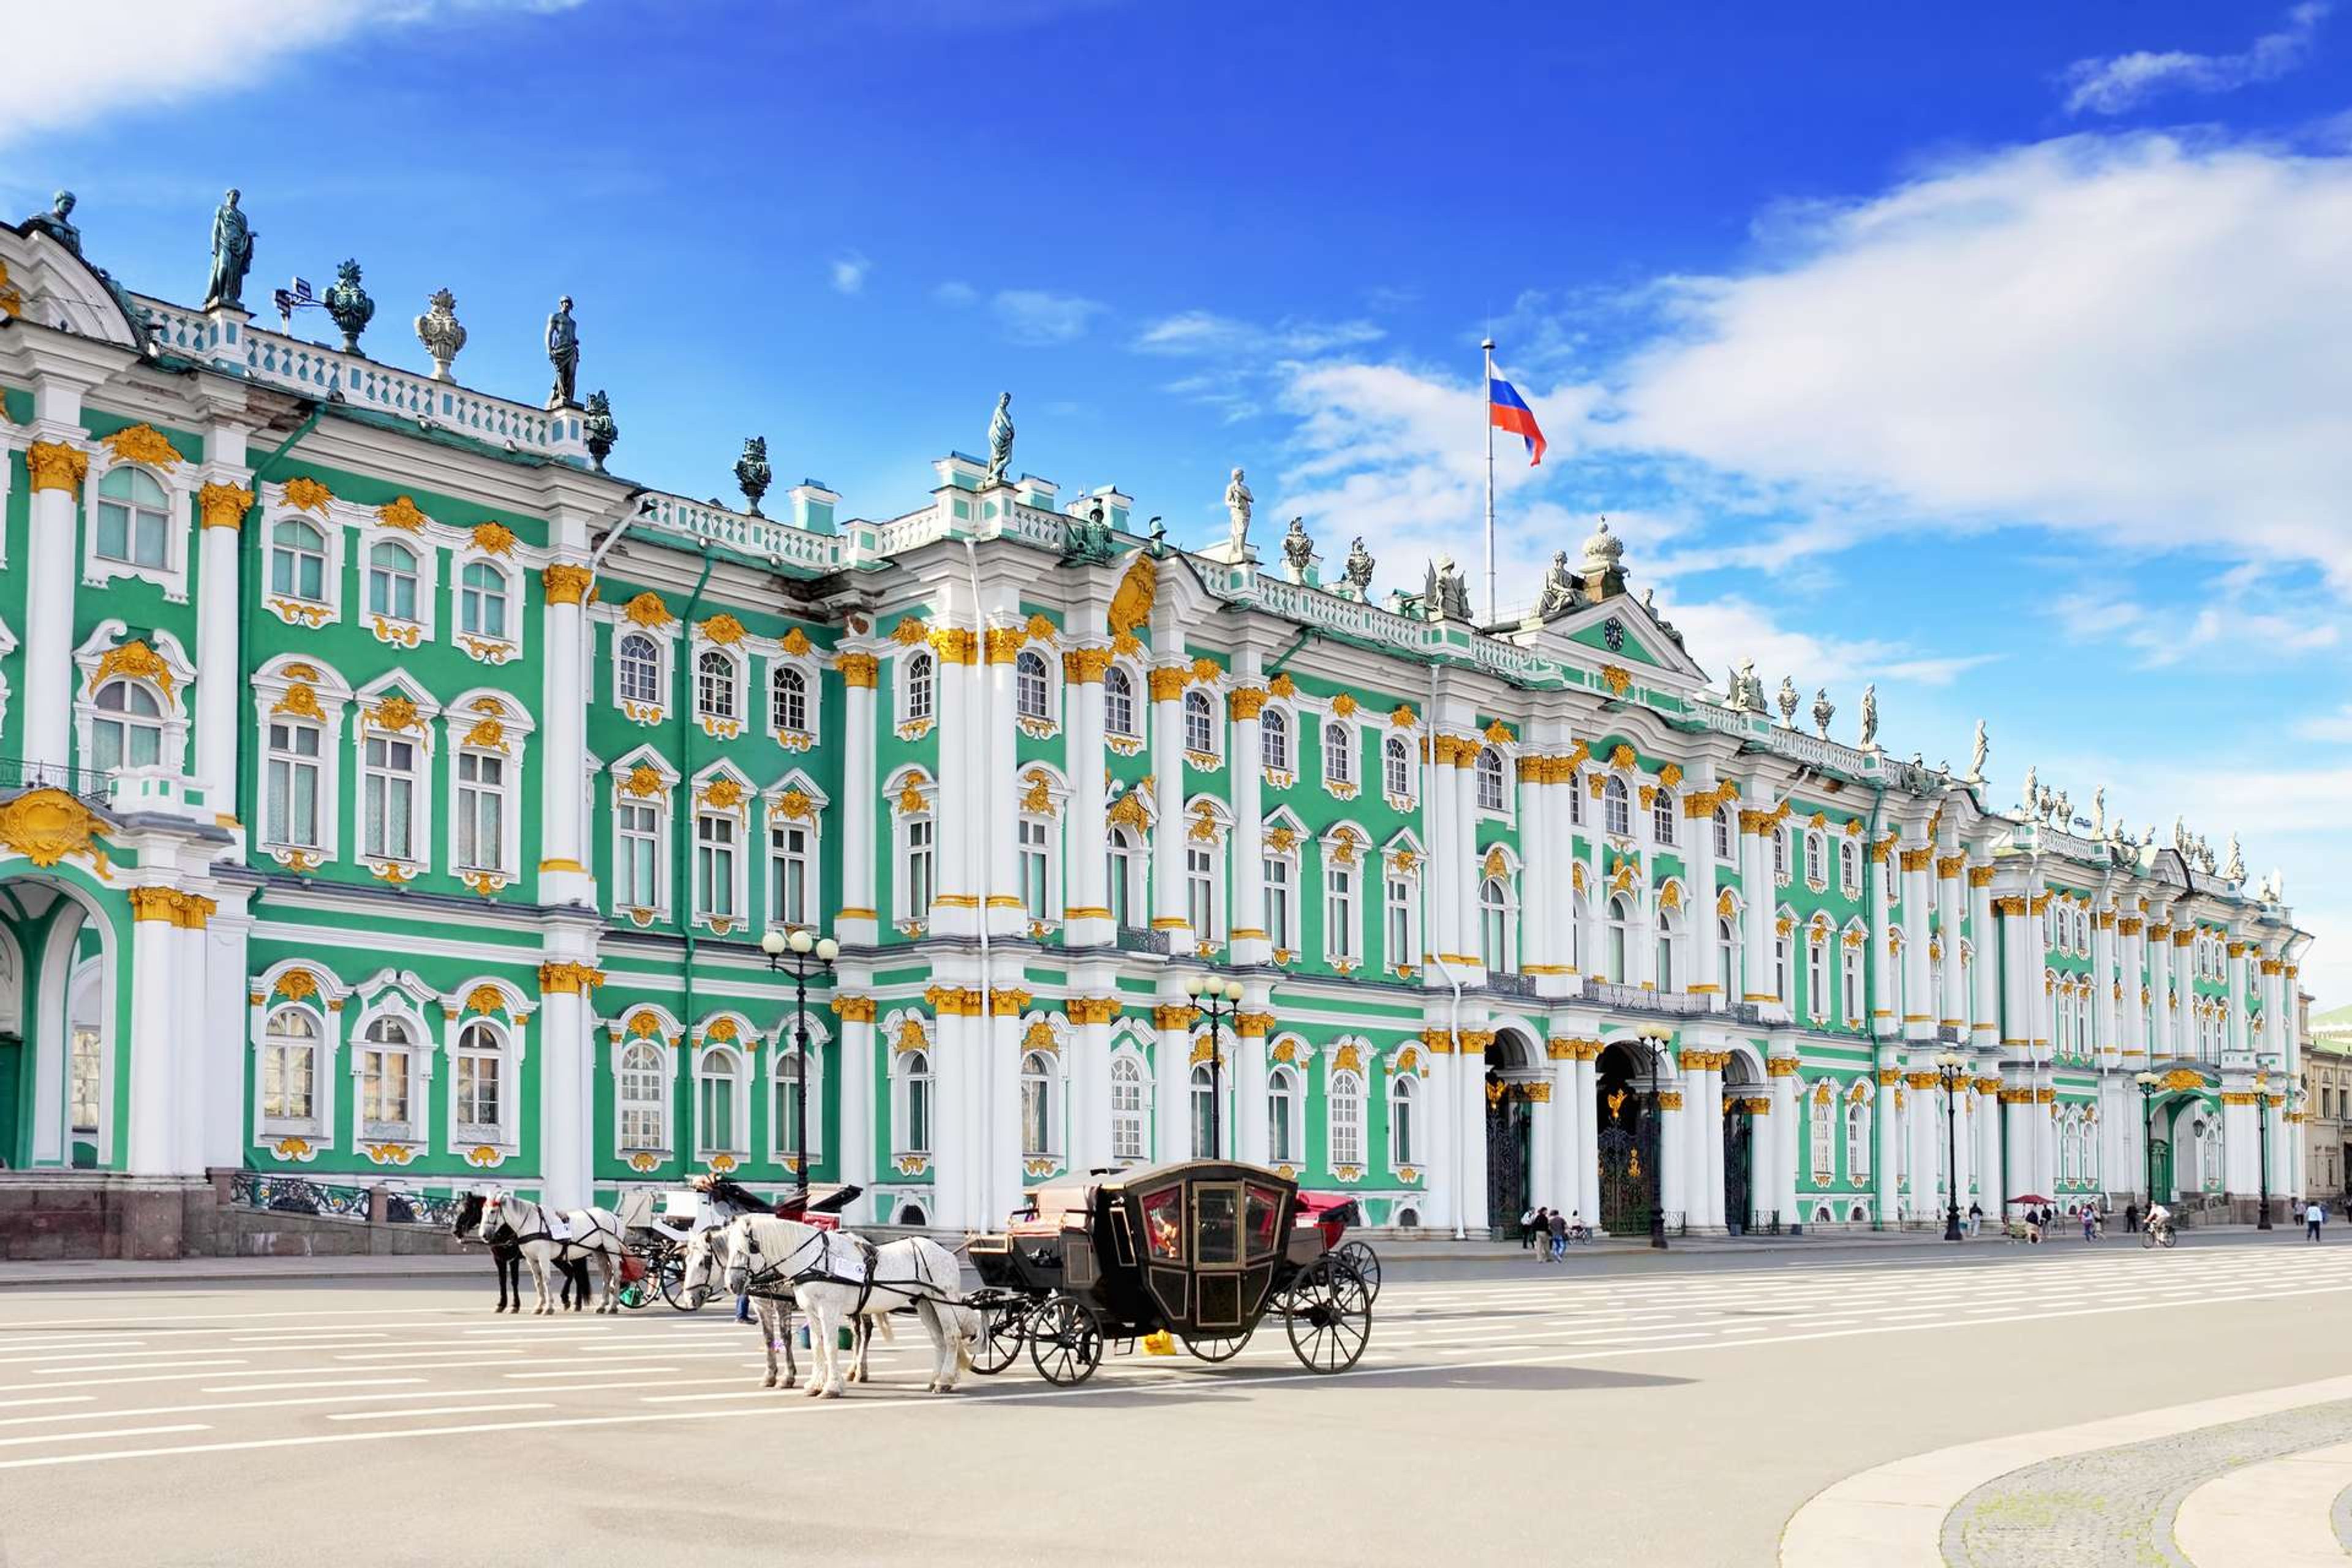 Rusland St. Petersburg Winter Palace square